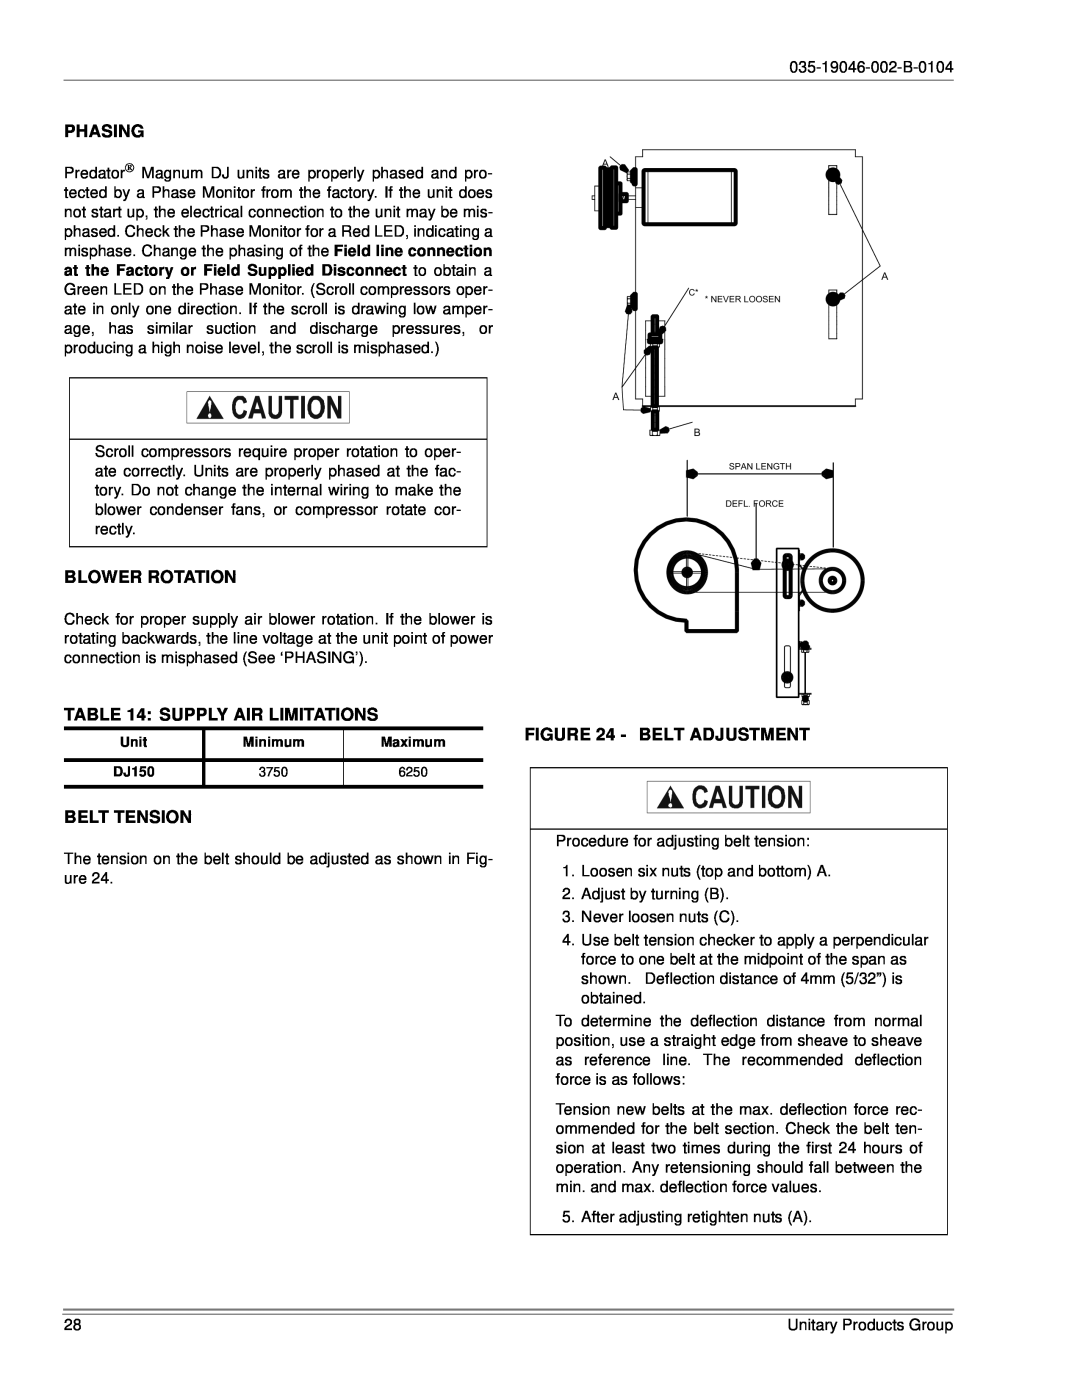 York DJ150 installation manual Phasing, Blower Rotation, Supply Air Limitations, Belt Tension, Belt Adjustment 